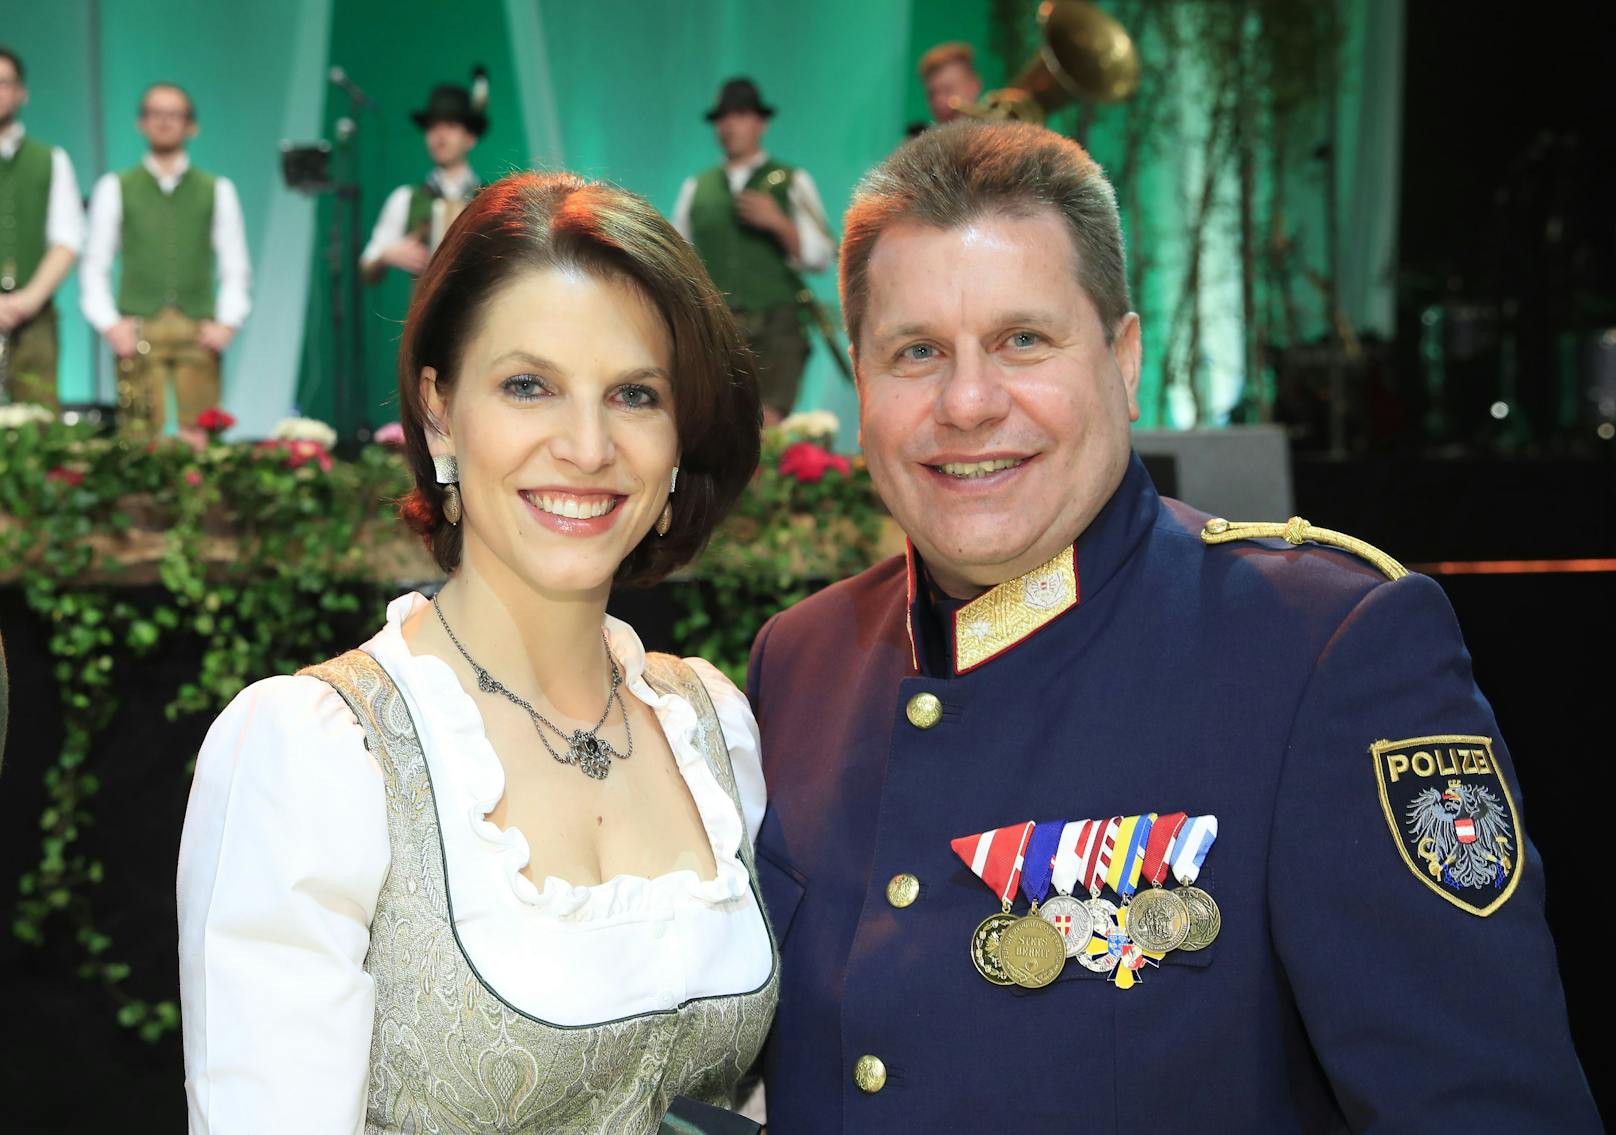 Generalmajor Michael Takács und Verfassungsministerin Karoline Edtstadler beim Bauernbundball 2019. 